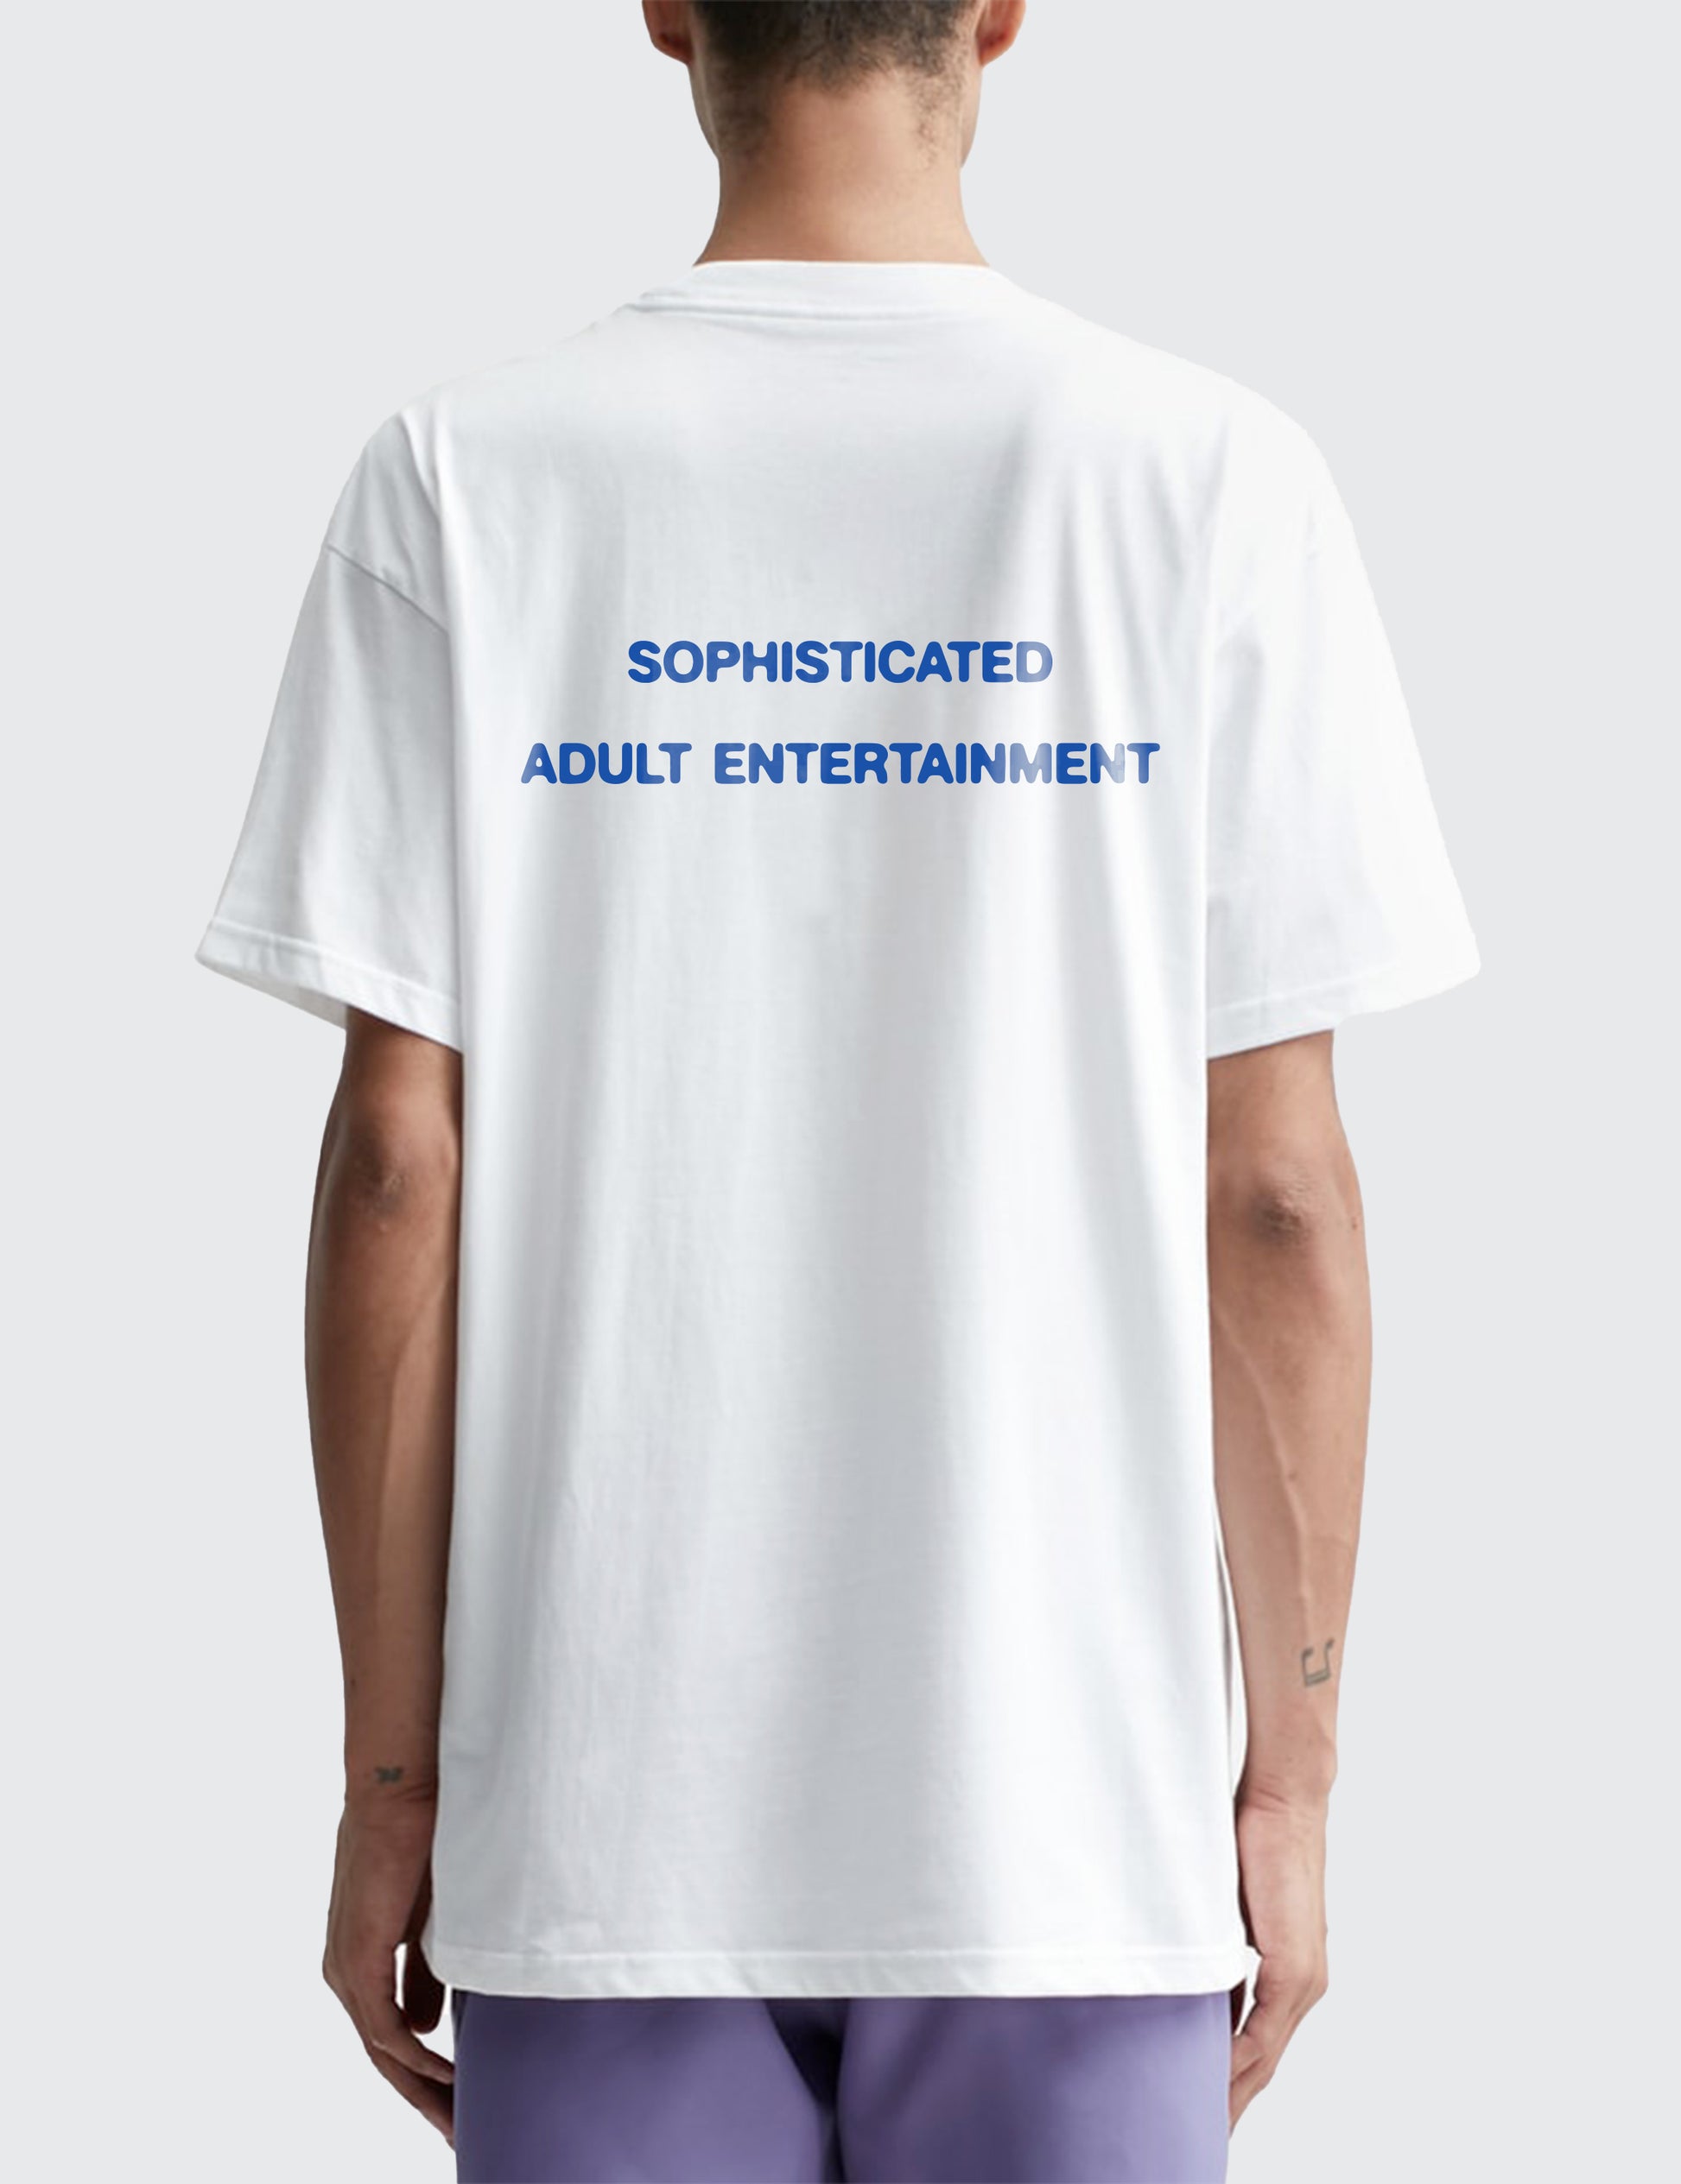 Motto T-Shirt (White)